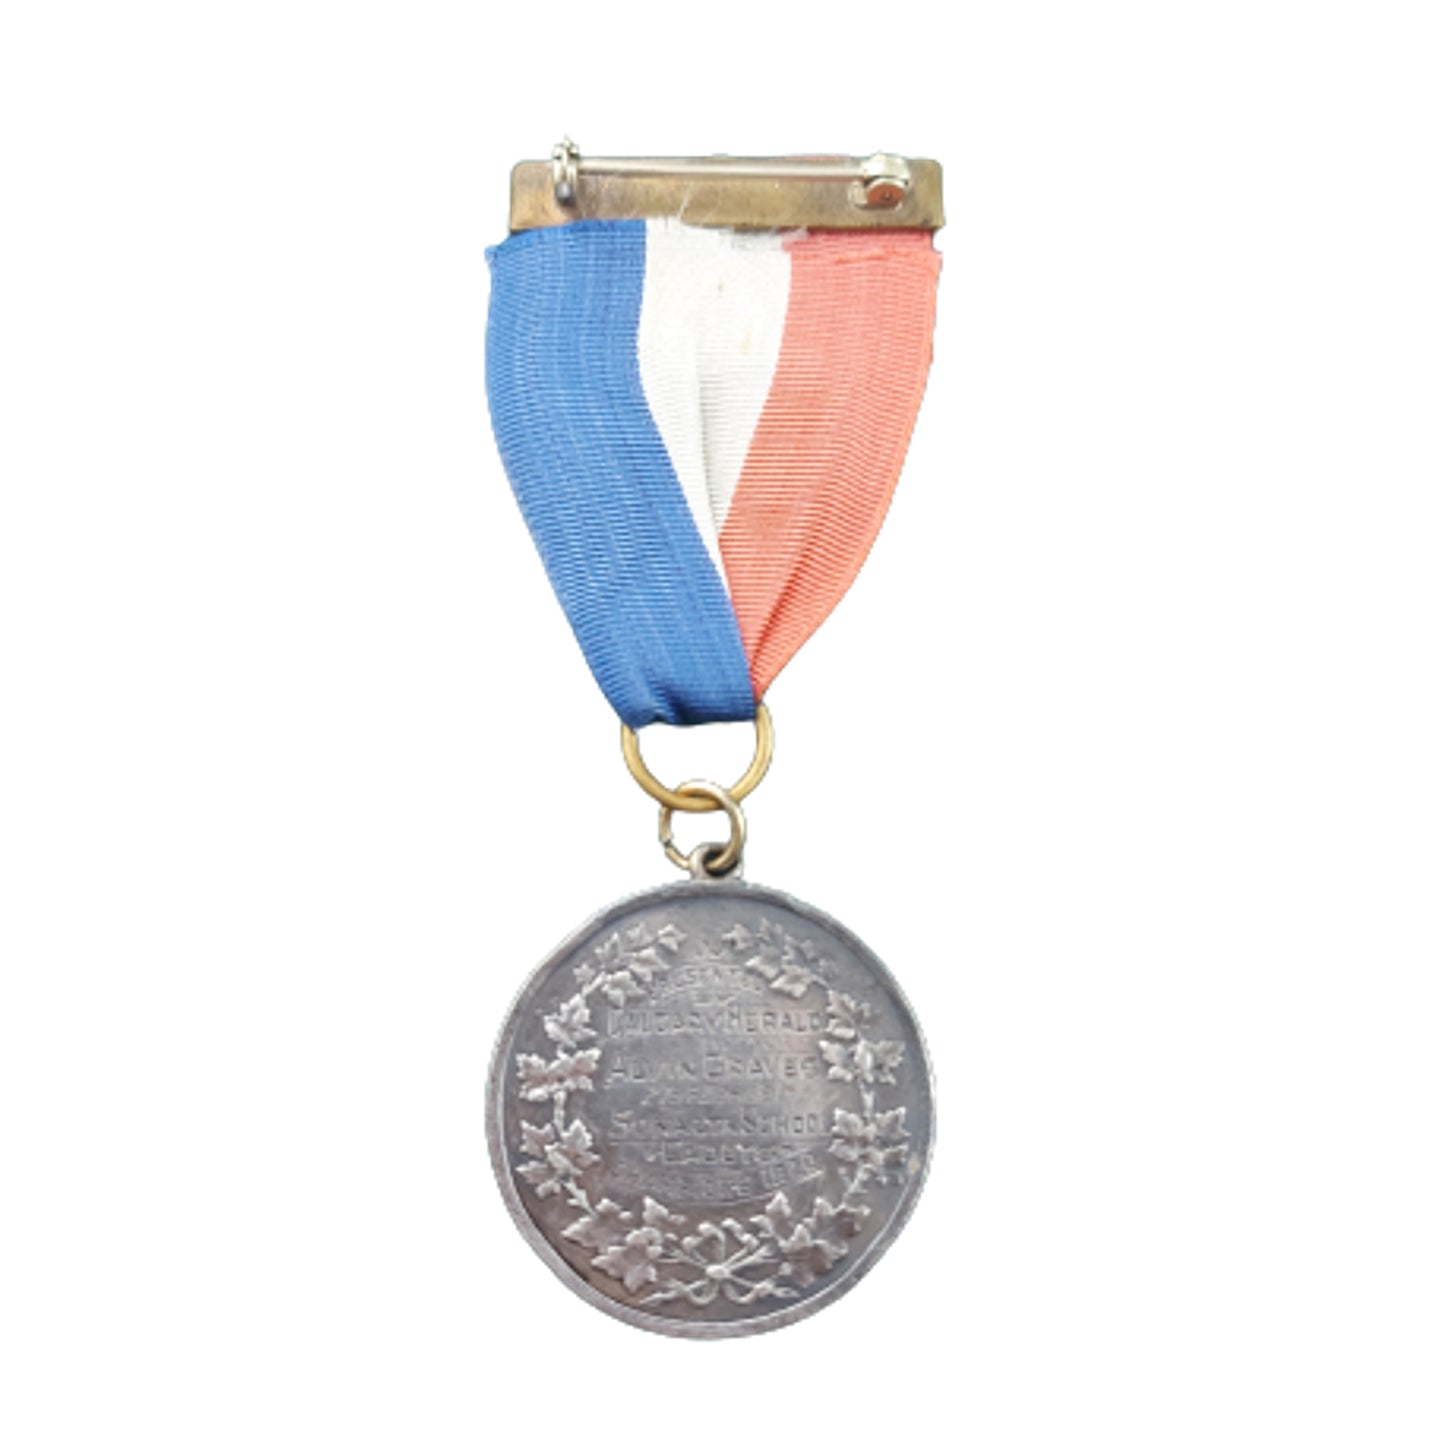 1920 Calgary Herald Newspaper Sunalta Cadets Sterling Silver Medal